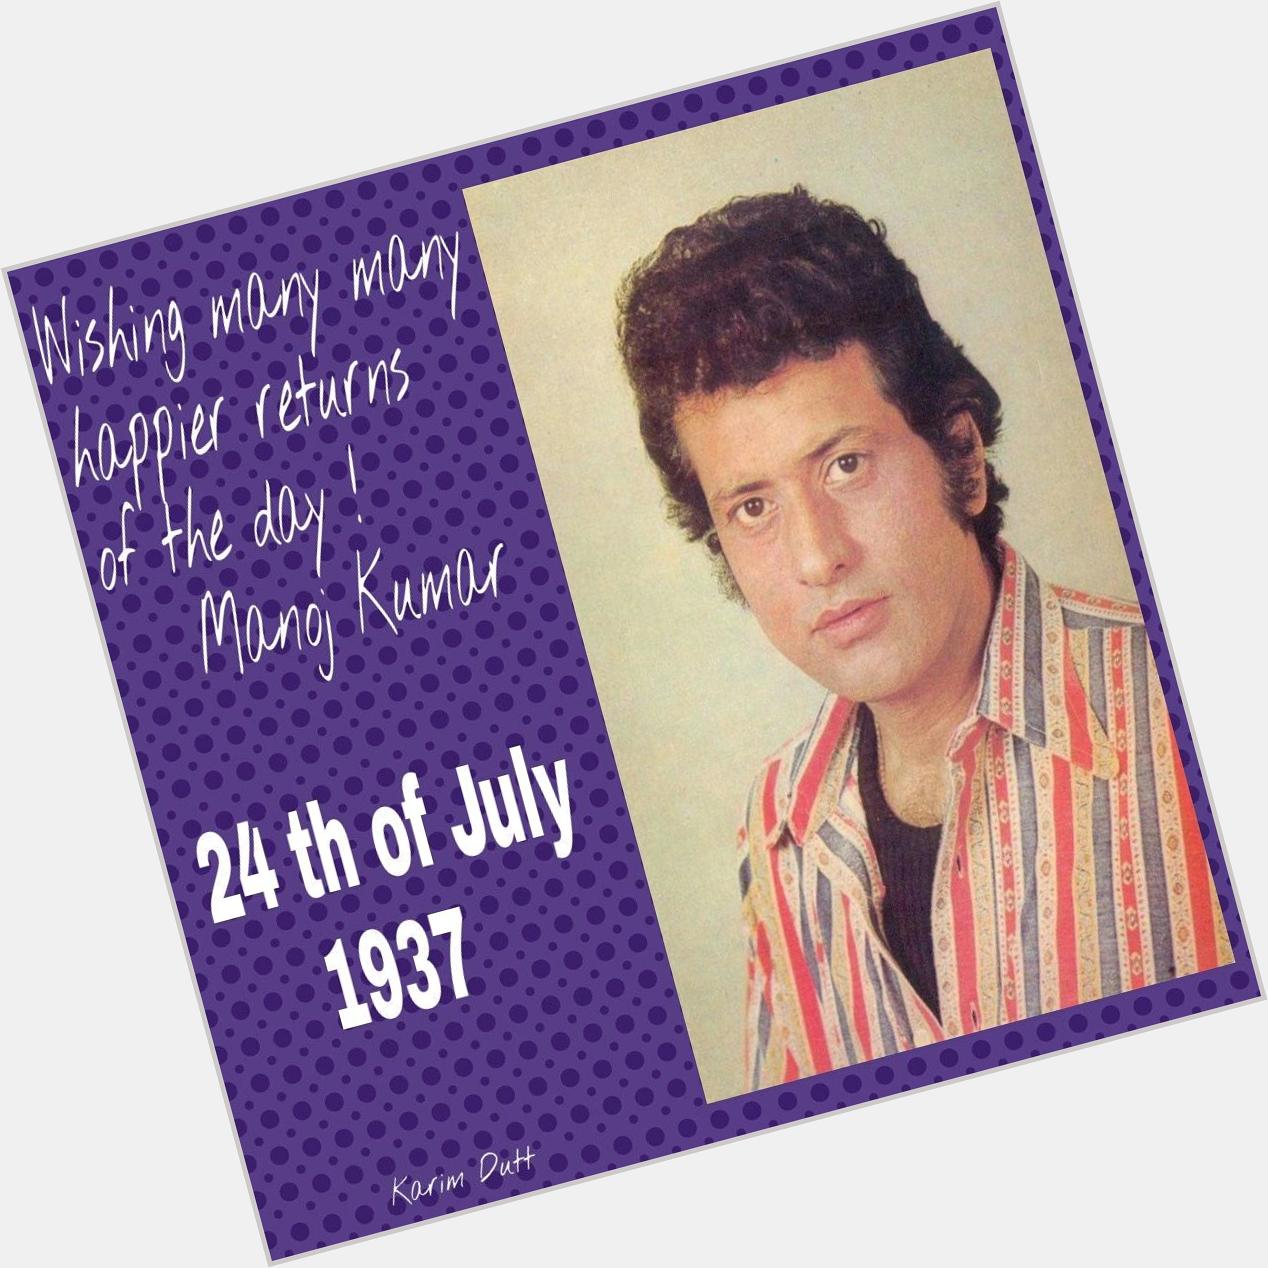 Happy birthday Manoj Kumar ji.. 